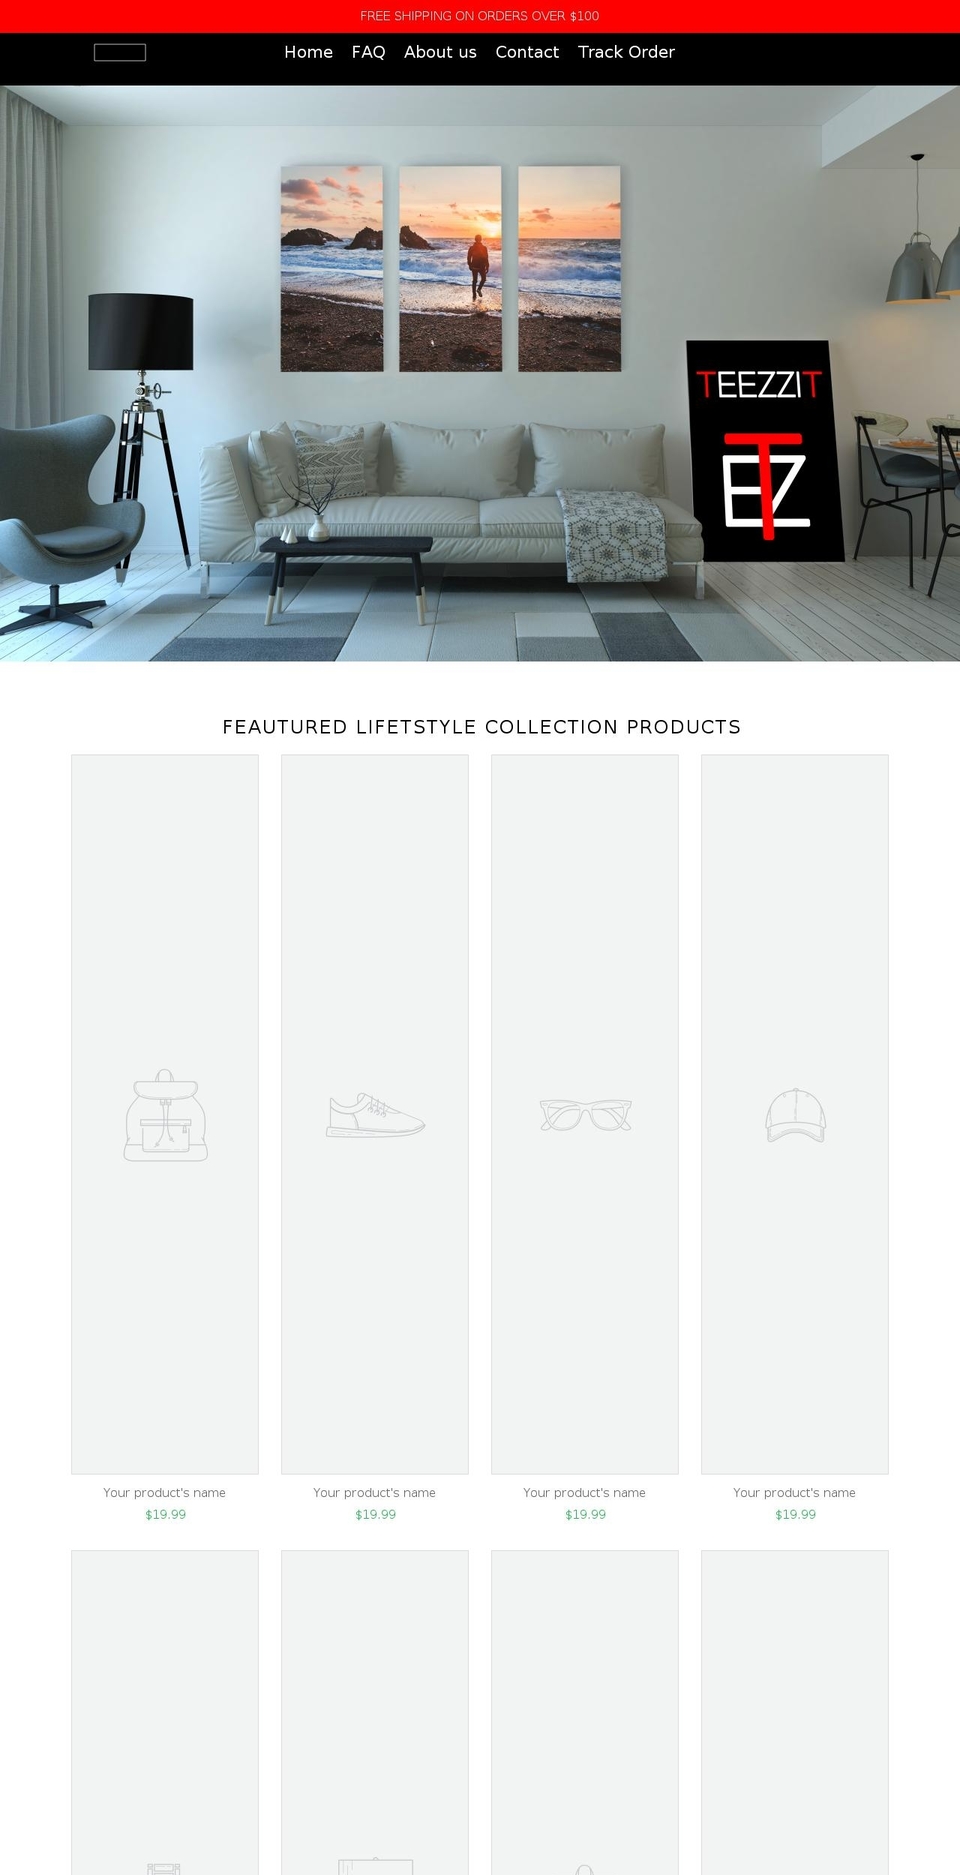 ecom-turbo-v2-7 Shopify theme site example teezzit.com